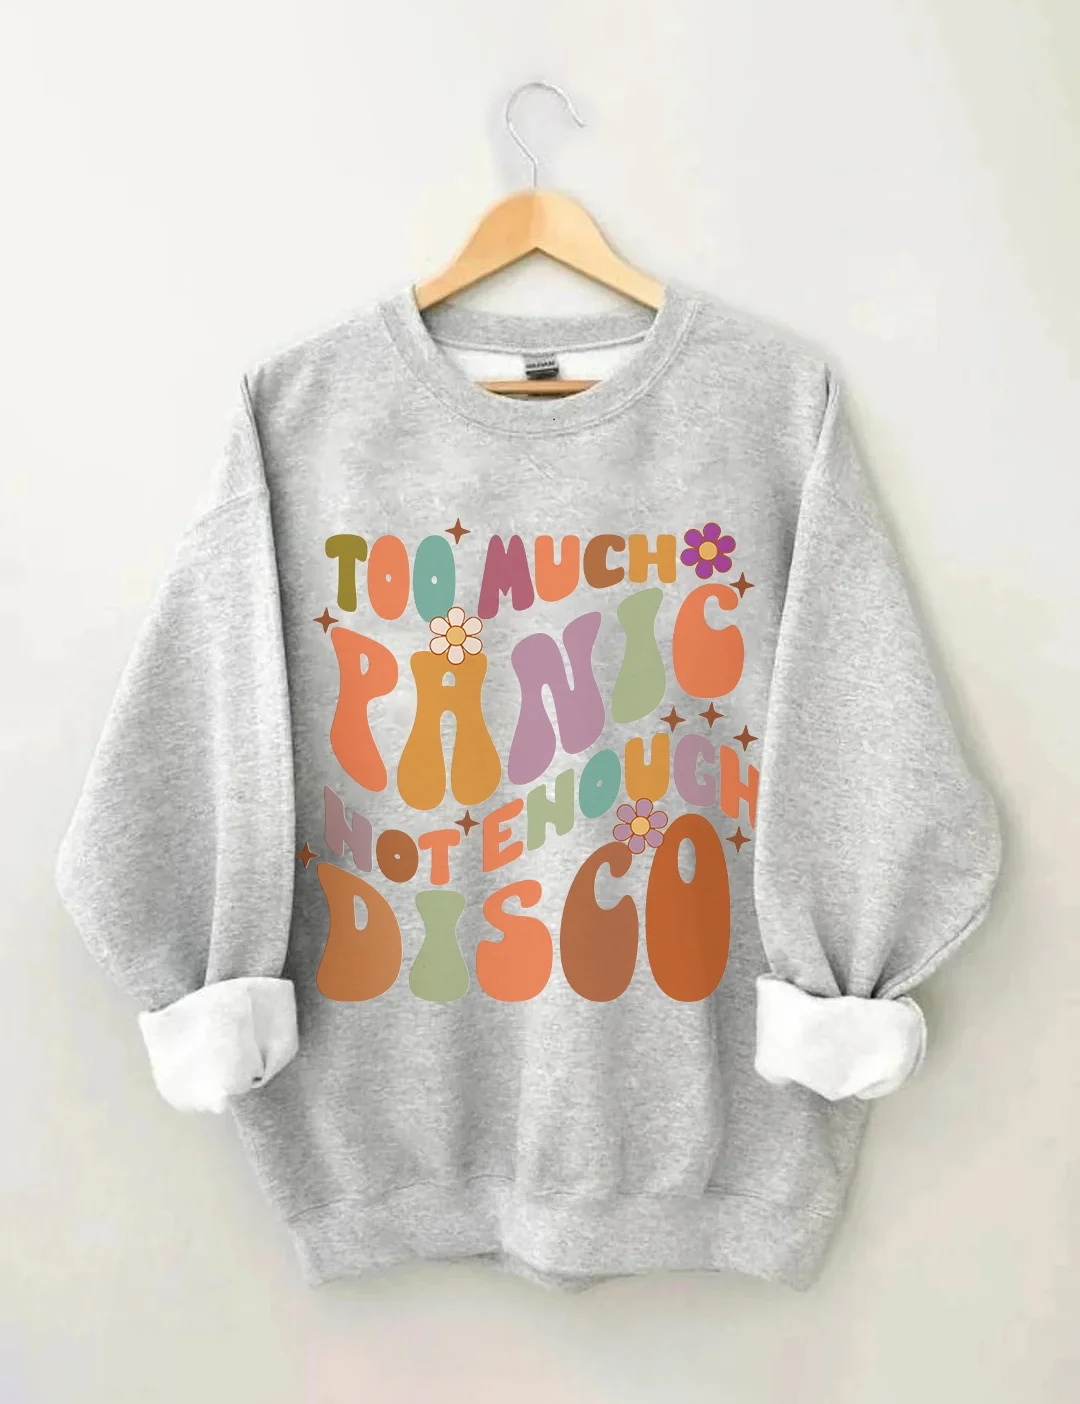 Too Much Panic Not Enough Disco Sweatshirt